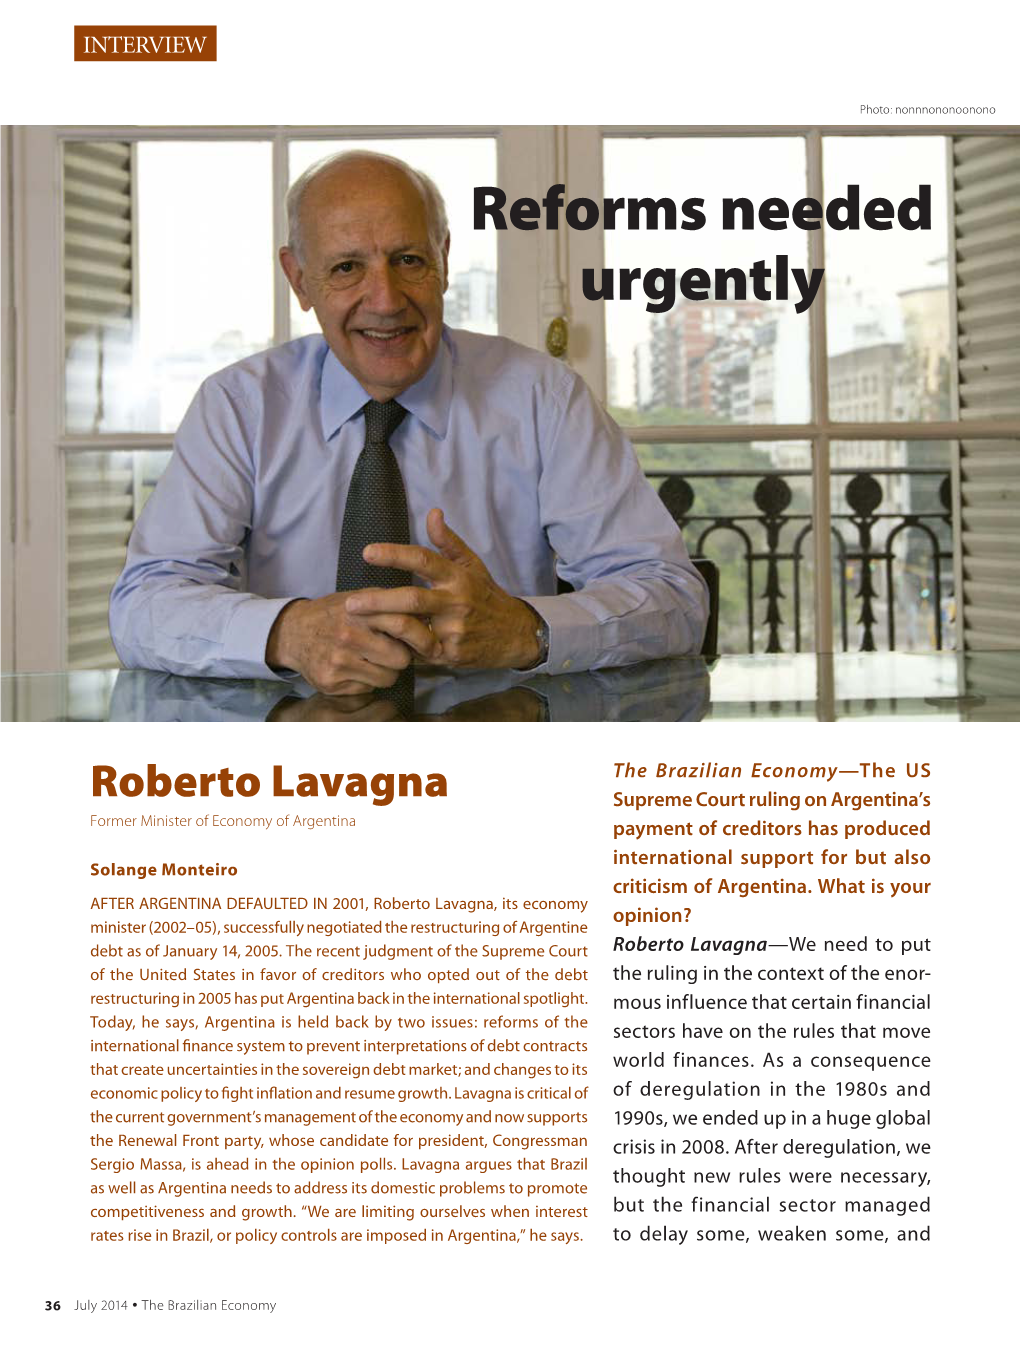 Reforms Needed Urgently